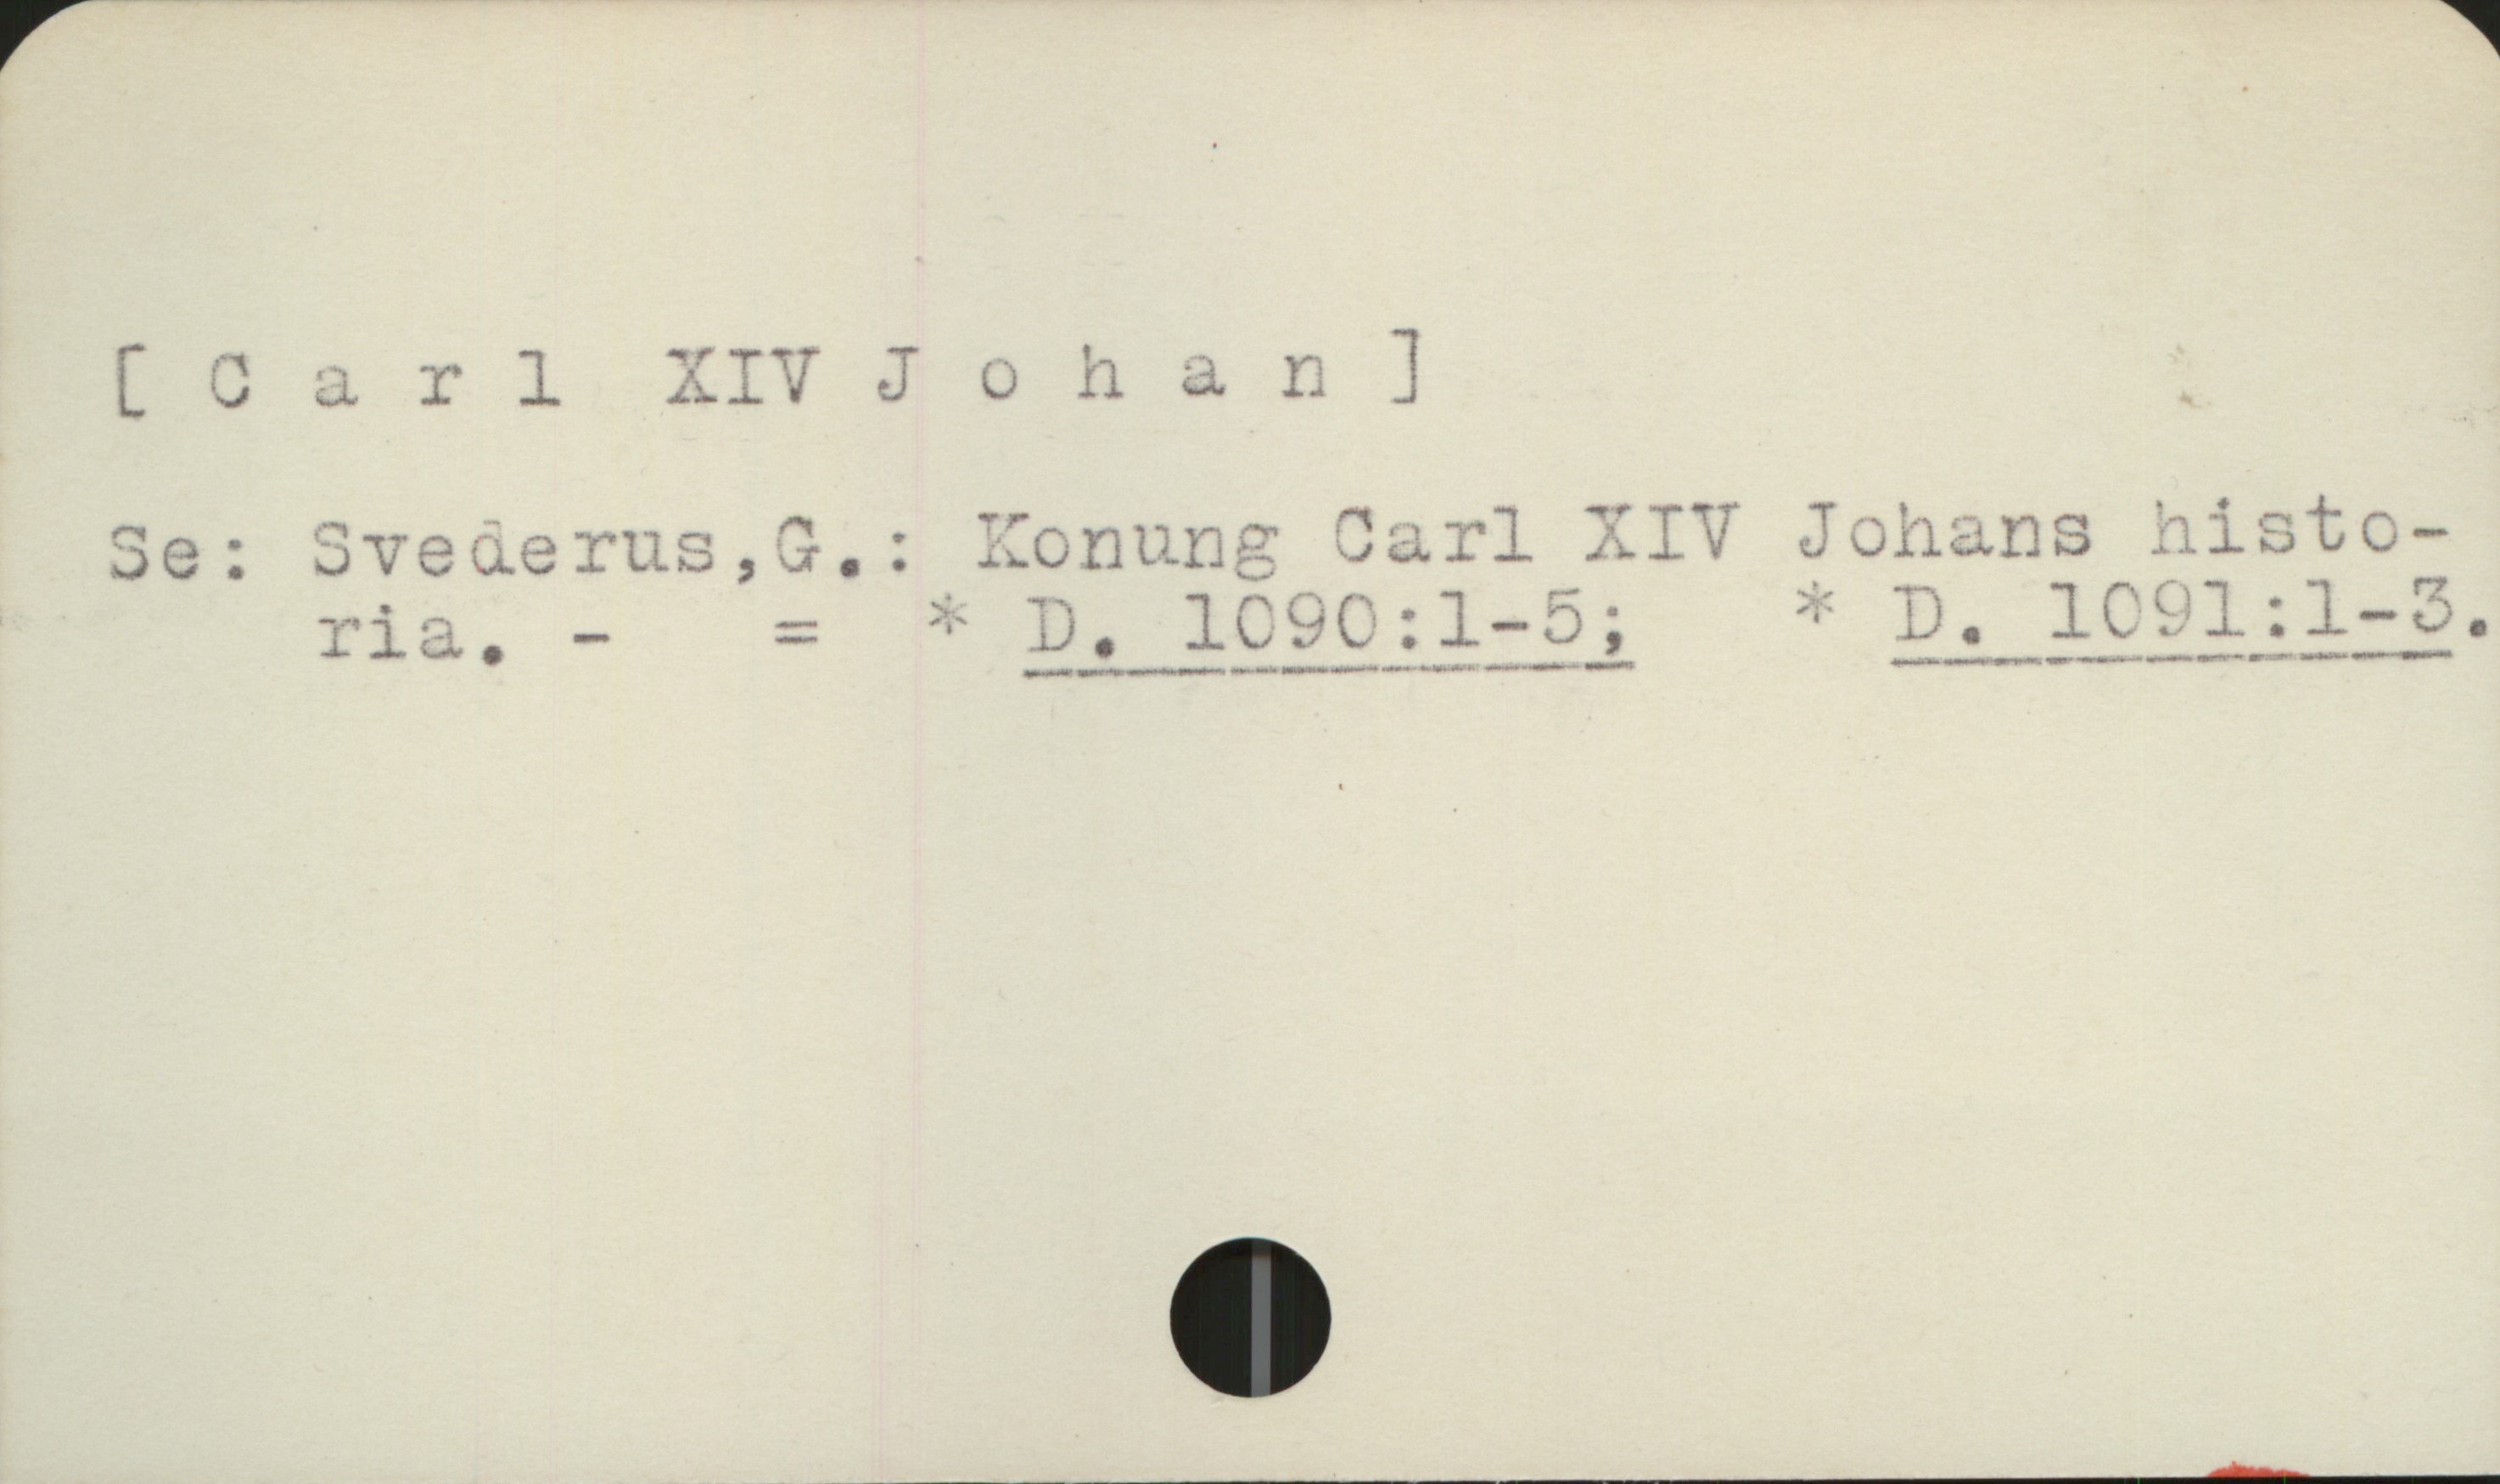  ( Carl XIV Johano ] i
Se: Svederus,3.: Konung Jarl XIV Johans histo-
ria. - -- ^ D., 1C90:1-59, © D.

